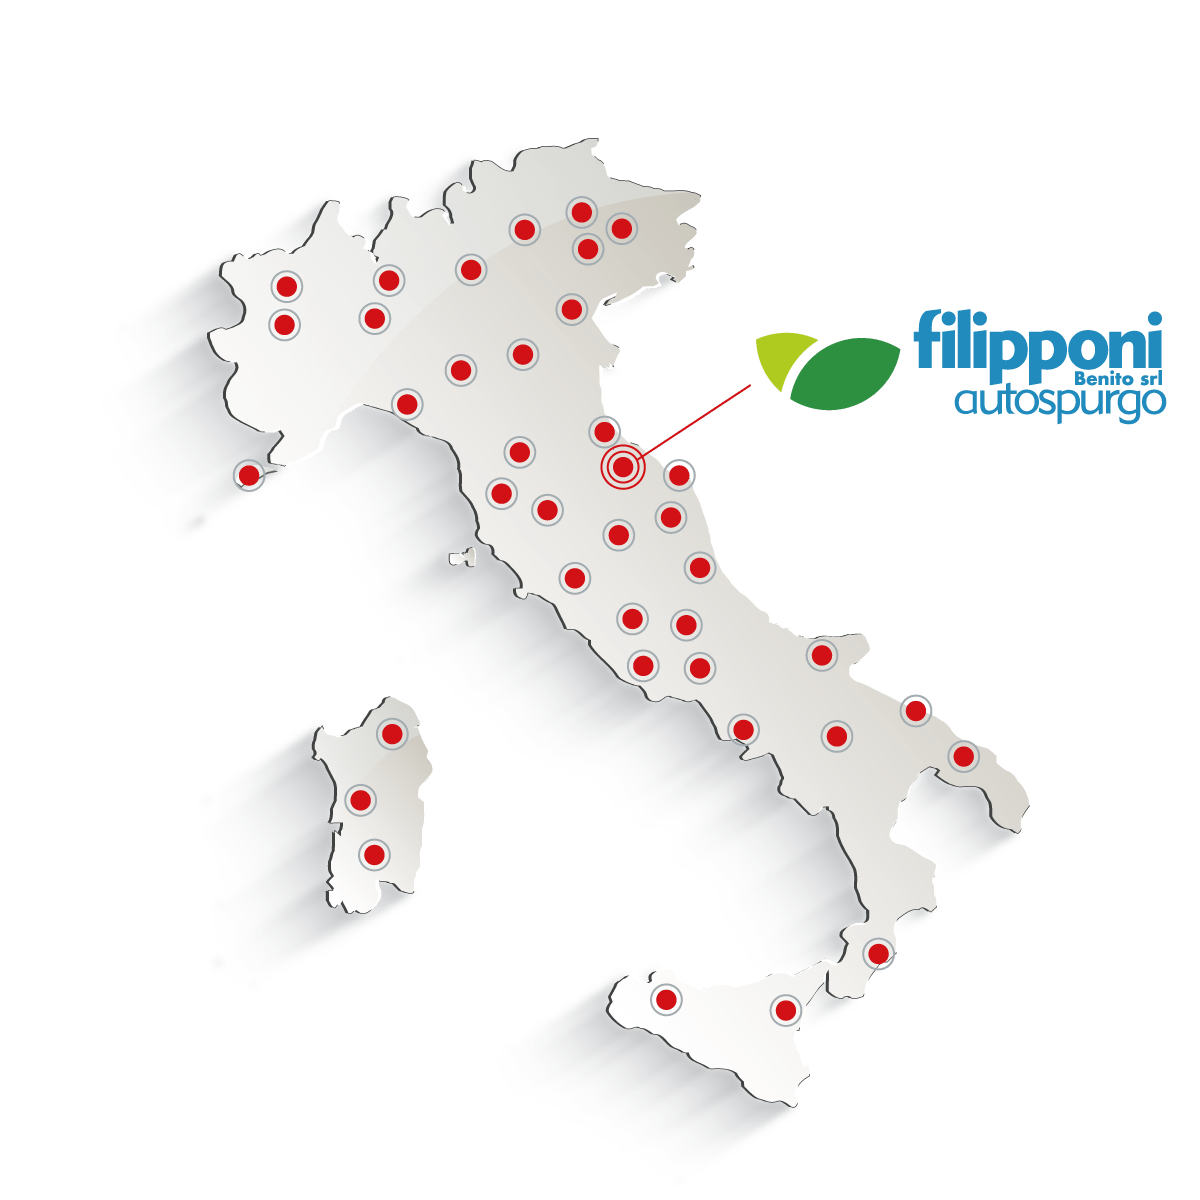 Filipponi Autospurgo- Bagni Mobili & WC Chimici a Fano